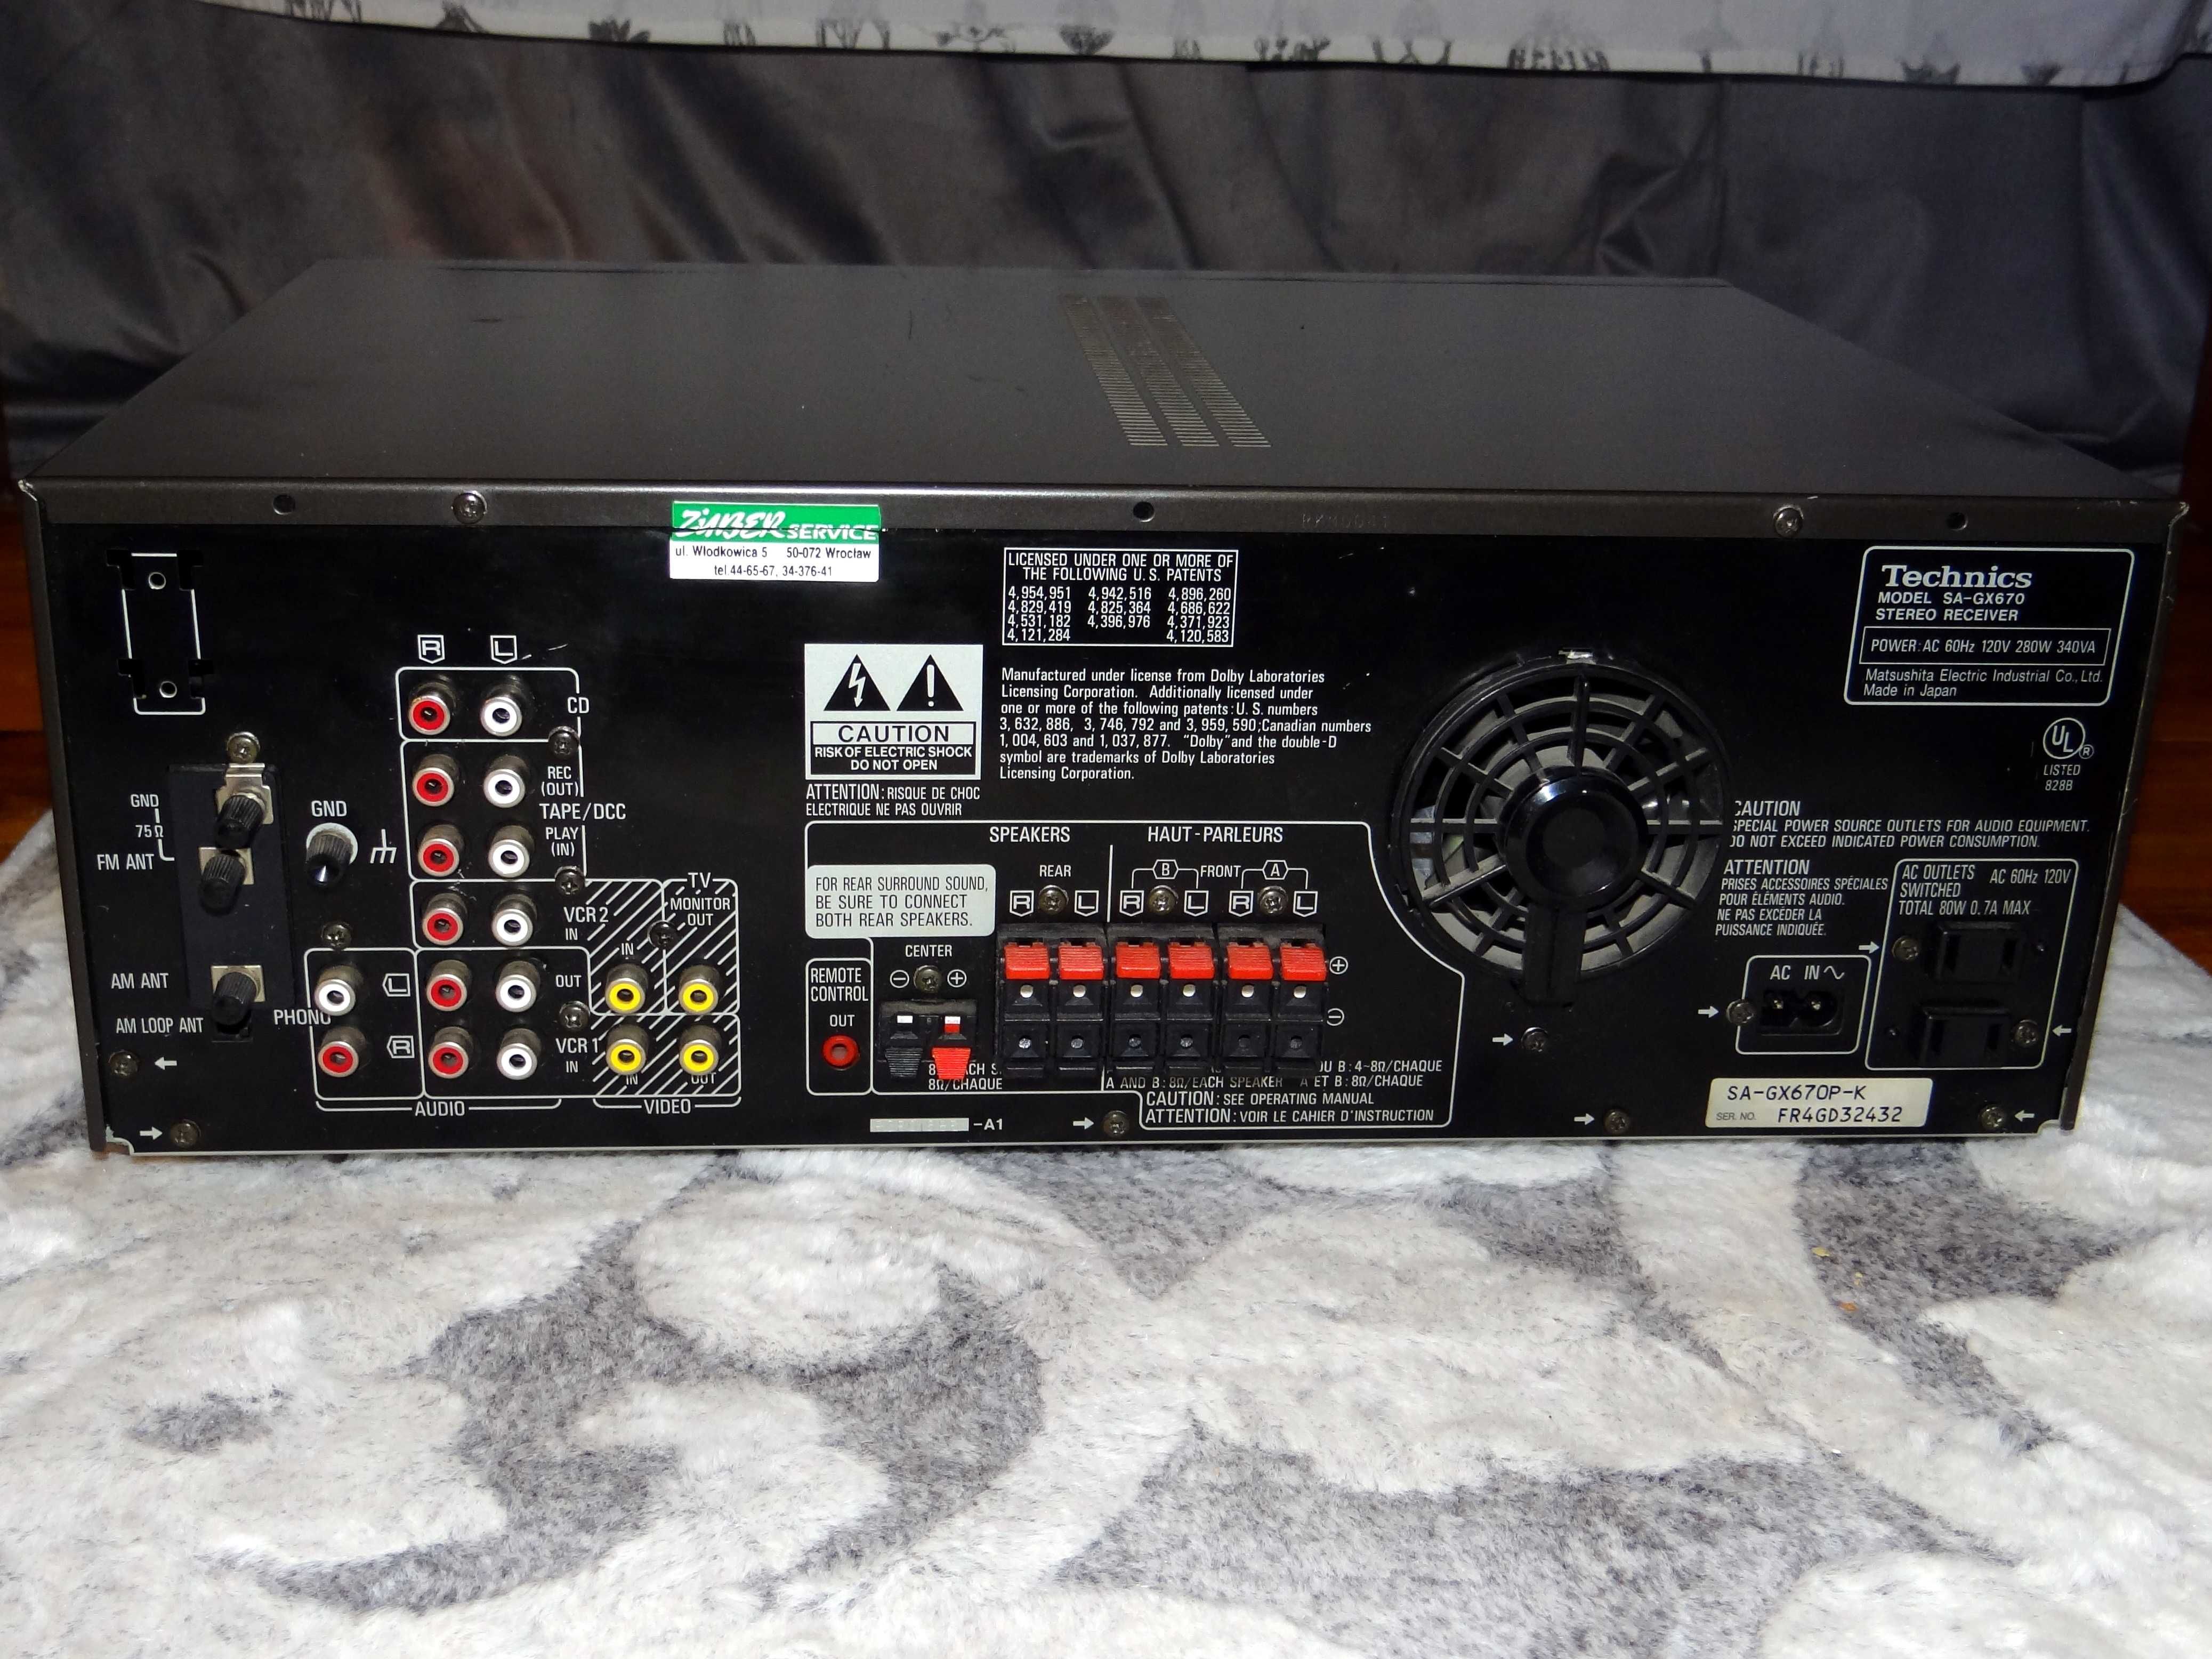 Amplituner Technics SA-GX670 5,1